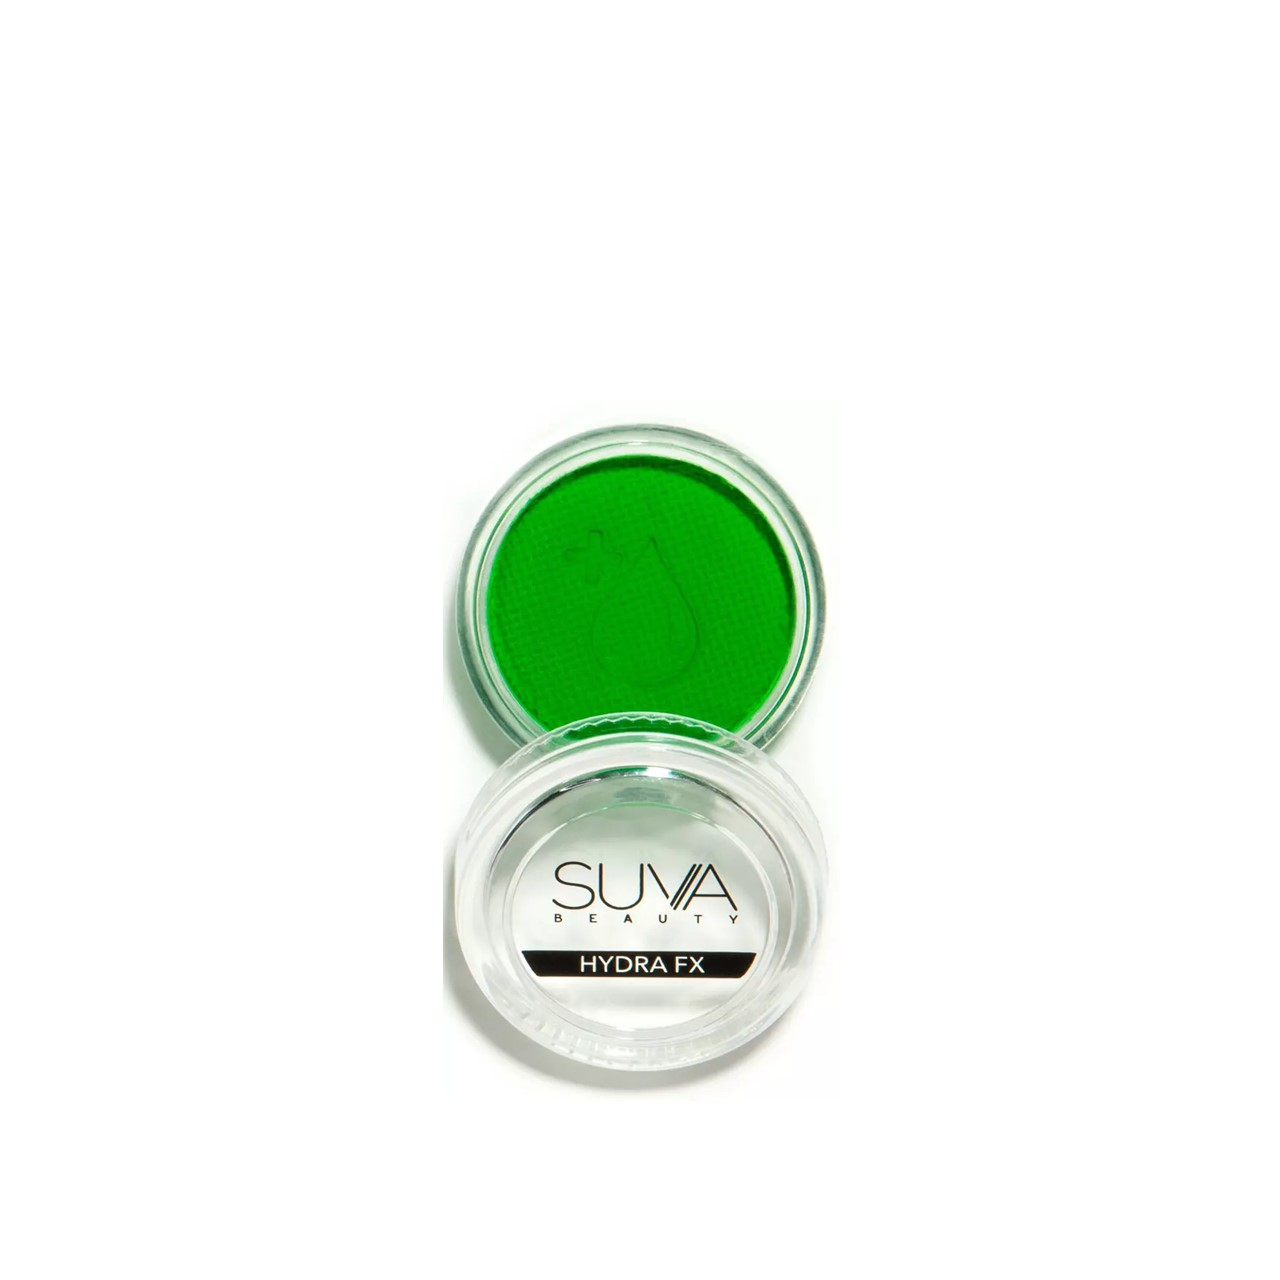 SUVA Beauty Hydra FX Fanny Pack UV Body Art 10g (0.35oz)